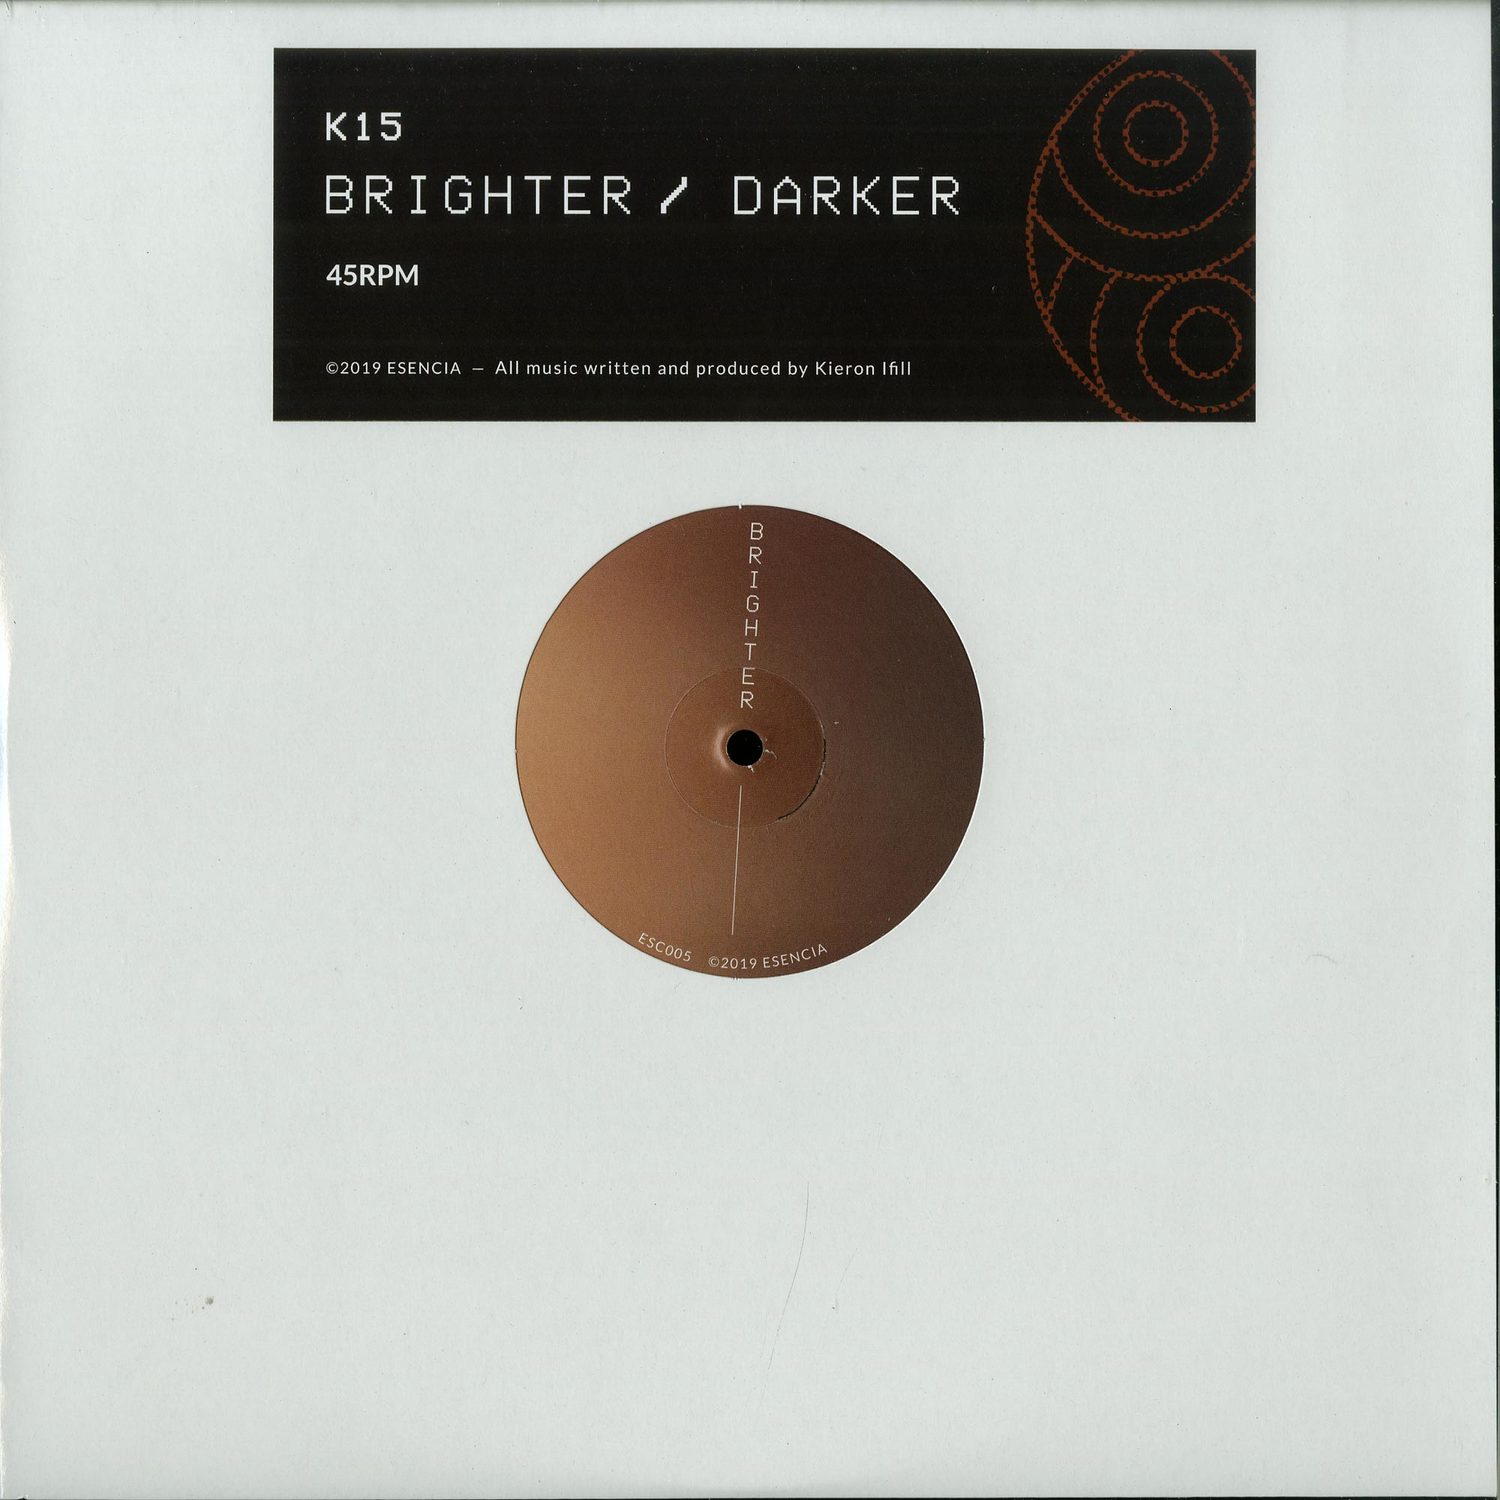 K15 - BRIGHTER / DARK